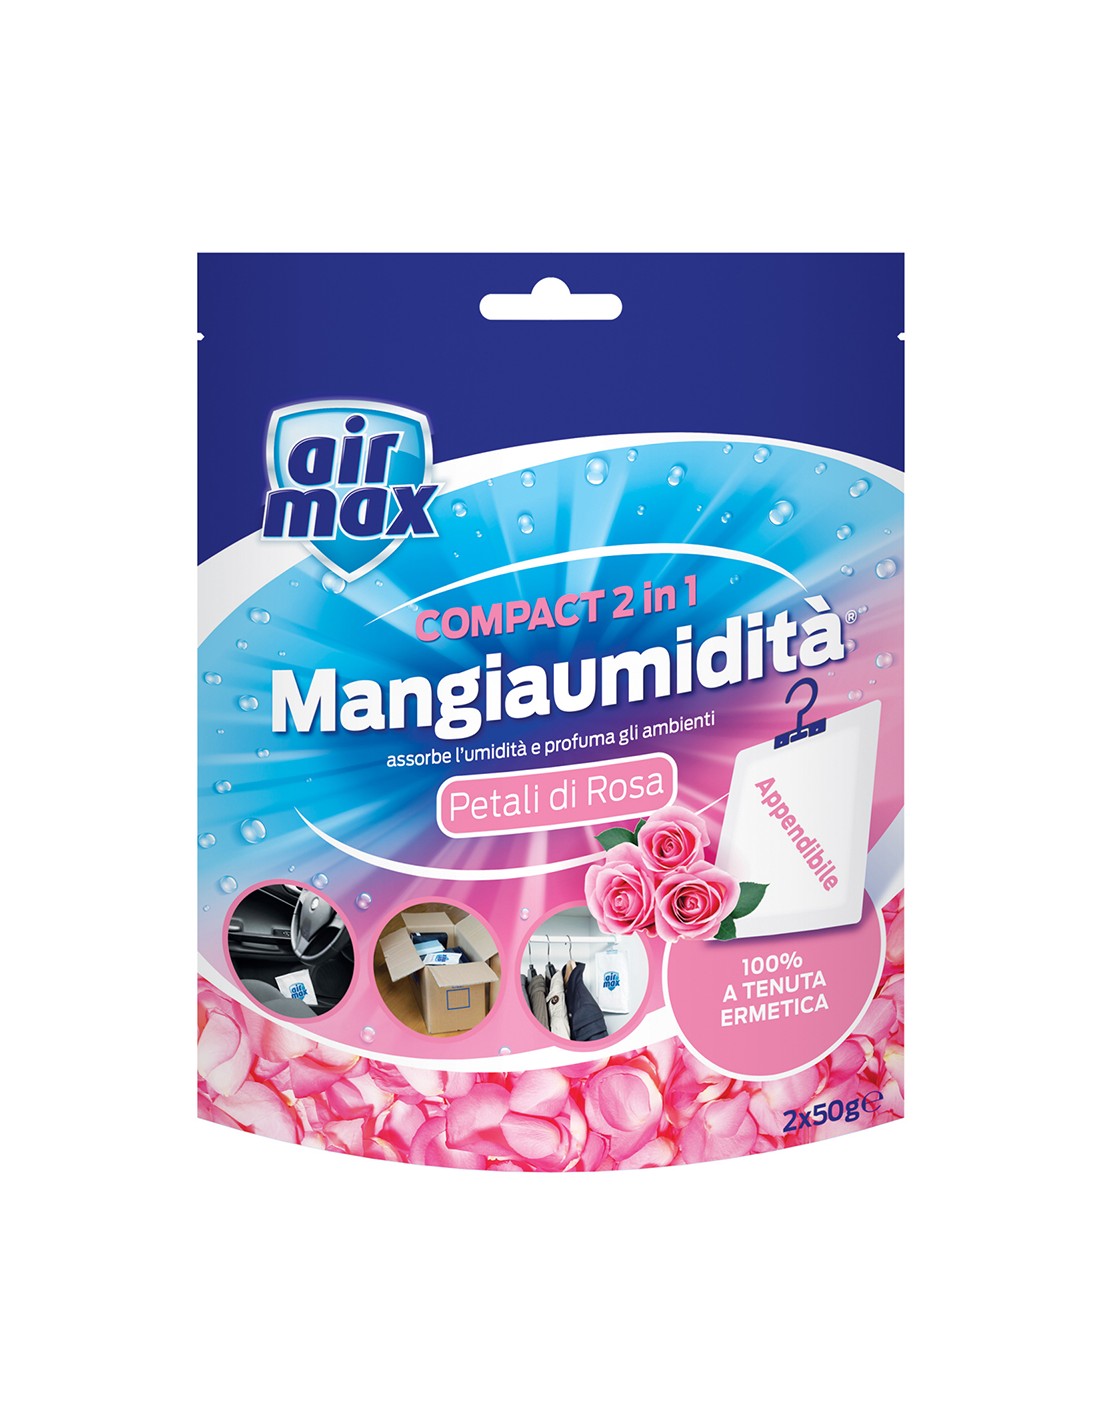 Air Max Mangia Umidita' Appendibile 2in1 Petali di Rosa 2x50gr